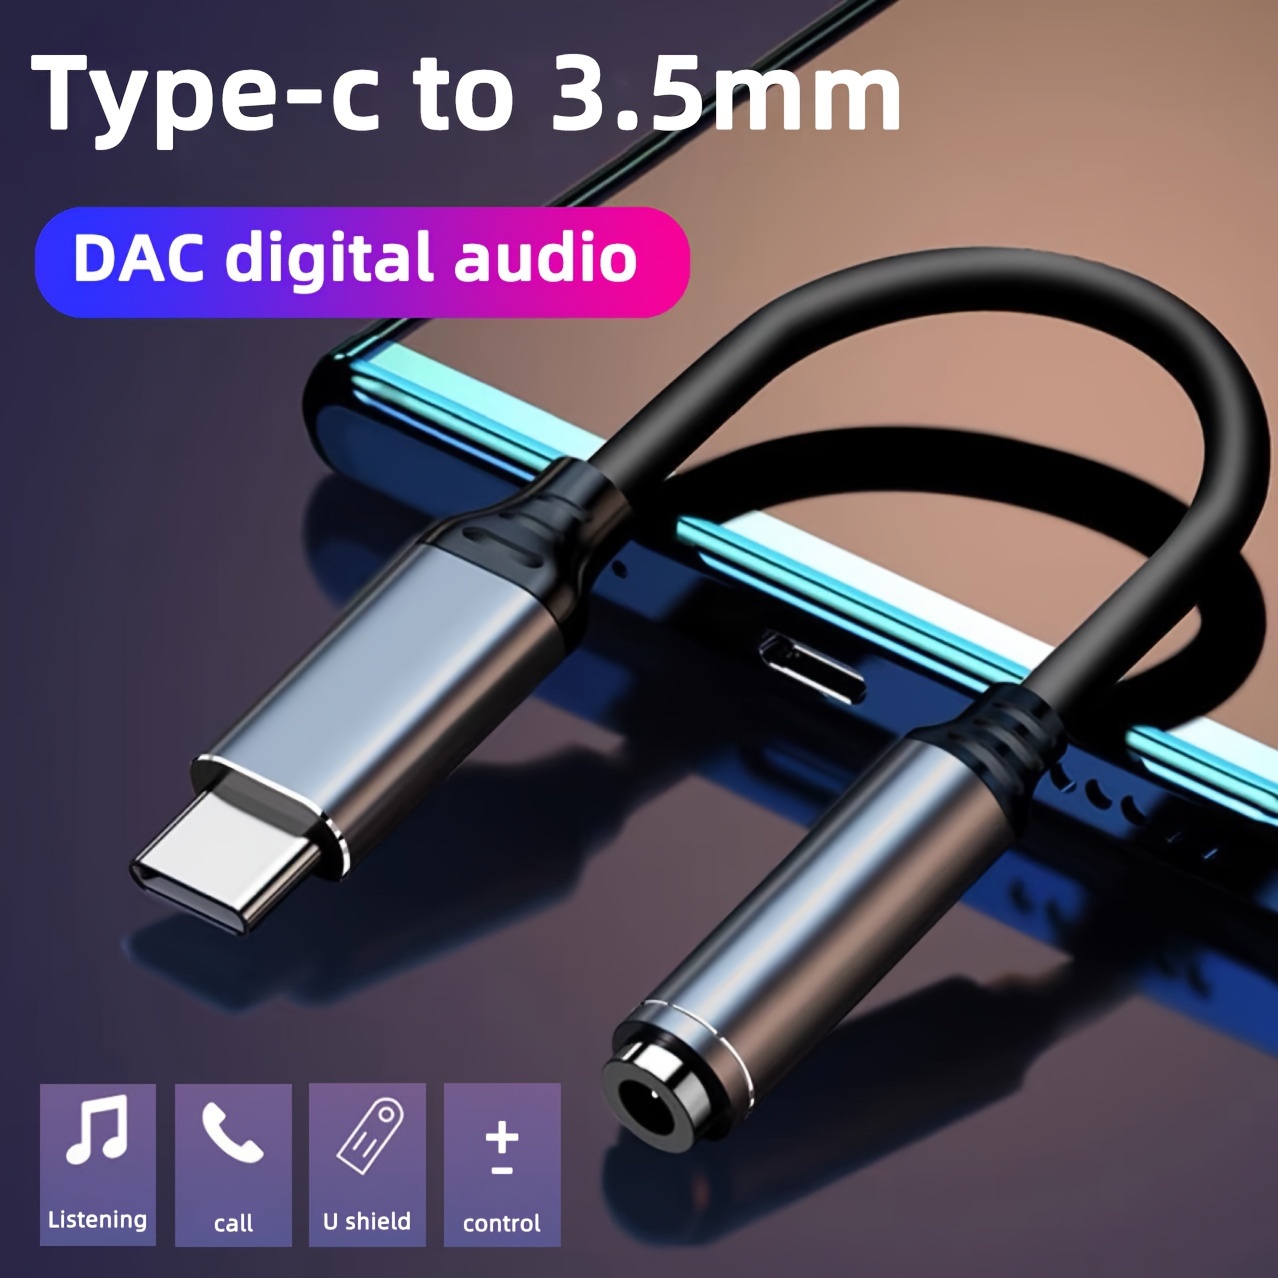 192khz Dac Amp Convertidor Audio Digital Analógico Rca 3.5mm Jack  Amplificador Auriculares Toslink Óptico Coaxial Salida Dac Convertidor  Digital Analógico! - Tecnología - Temu Mexico